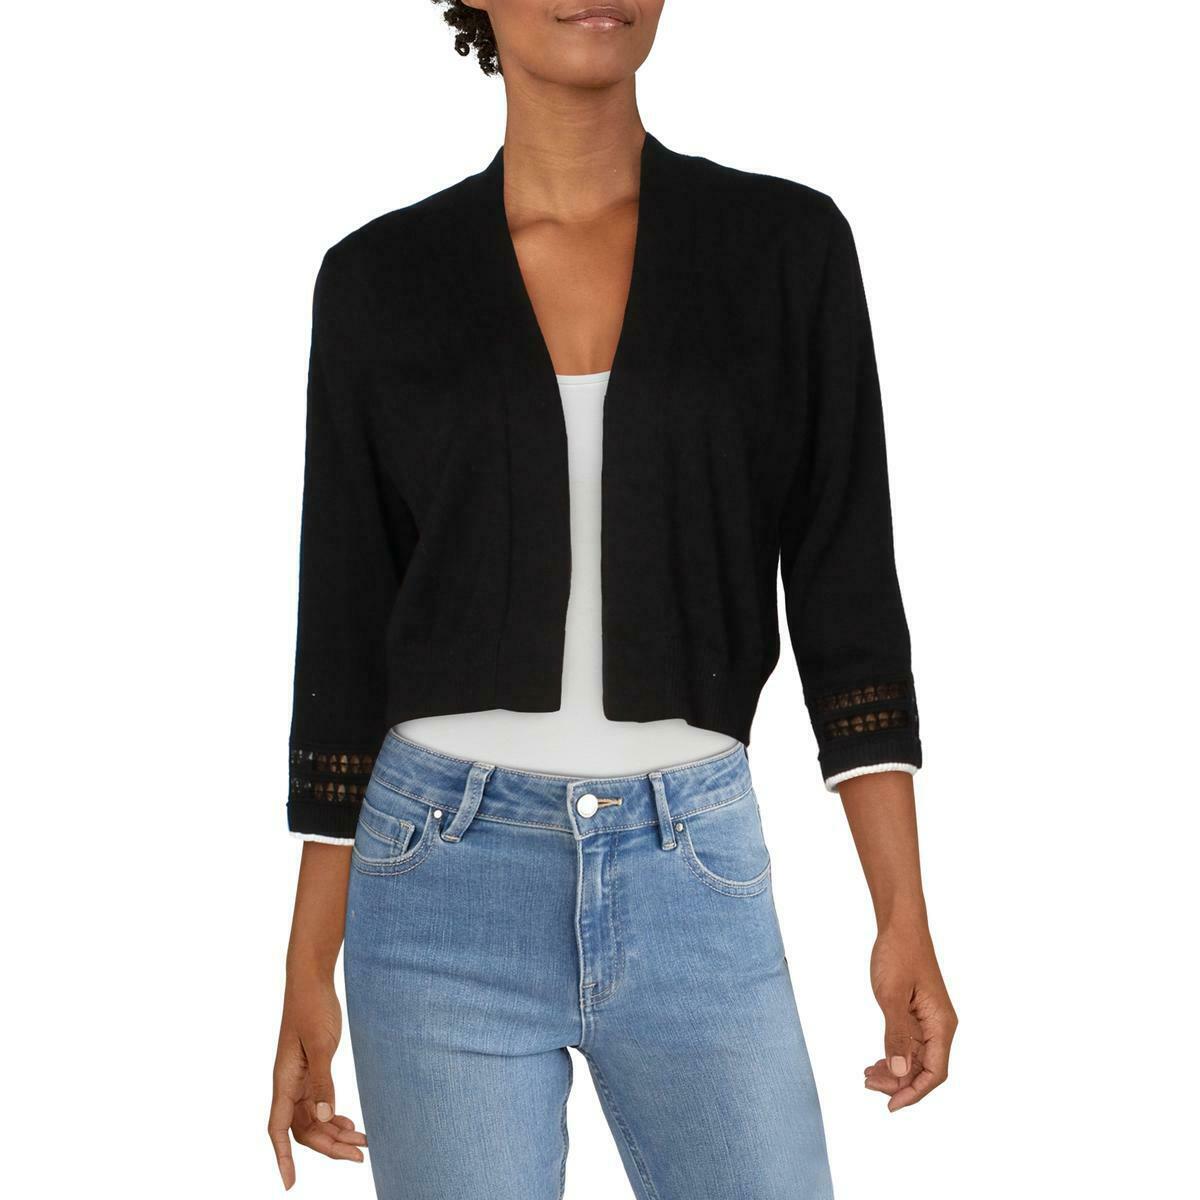 Ivanka Trump Womens Black Lace Contrast Trim Cardigan Sweater Jacket M BHFO 9524